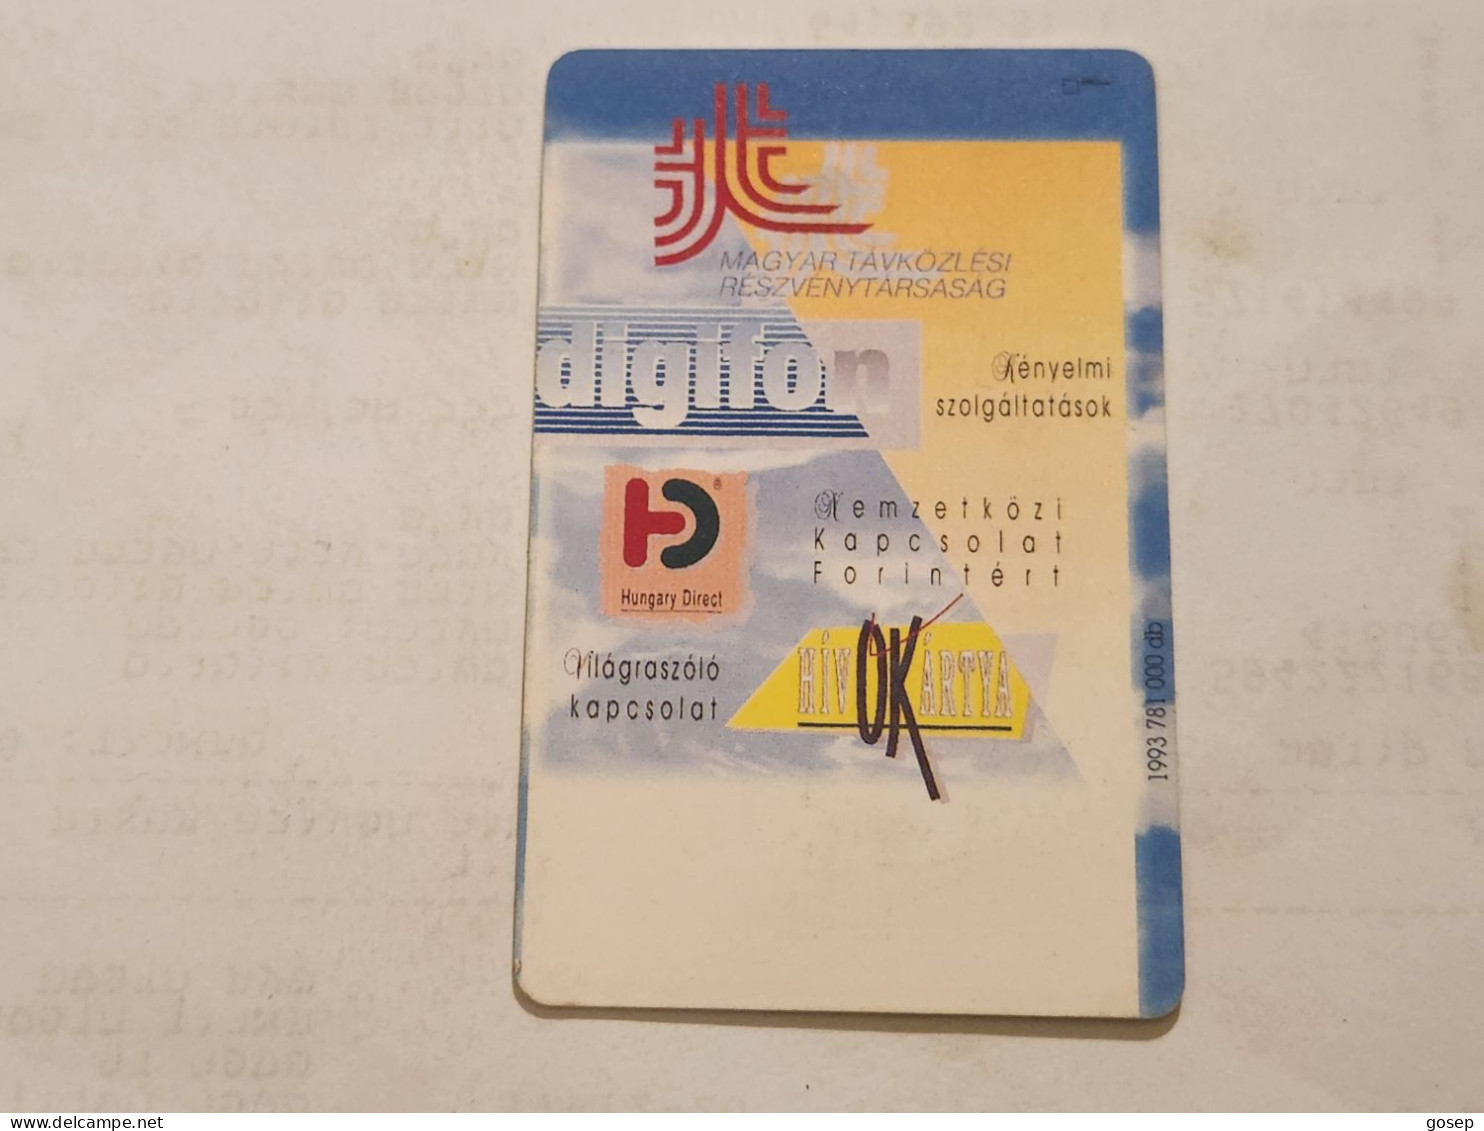 HUNGARY-(HU-P-1993-32Aa)-MATAV-(177)(500units)(11/93)(tirage-781.000)-USED CARD+1card Prepiad Free - Hongarije